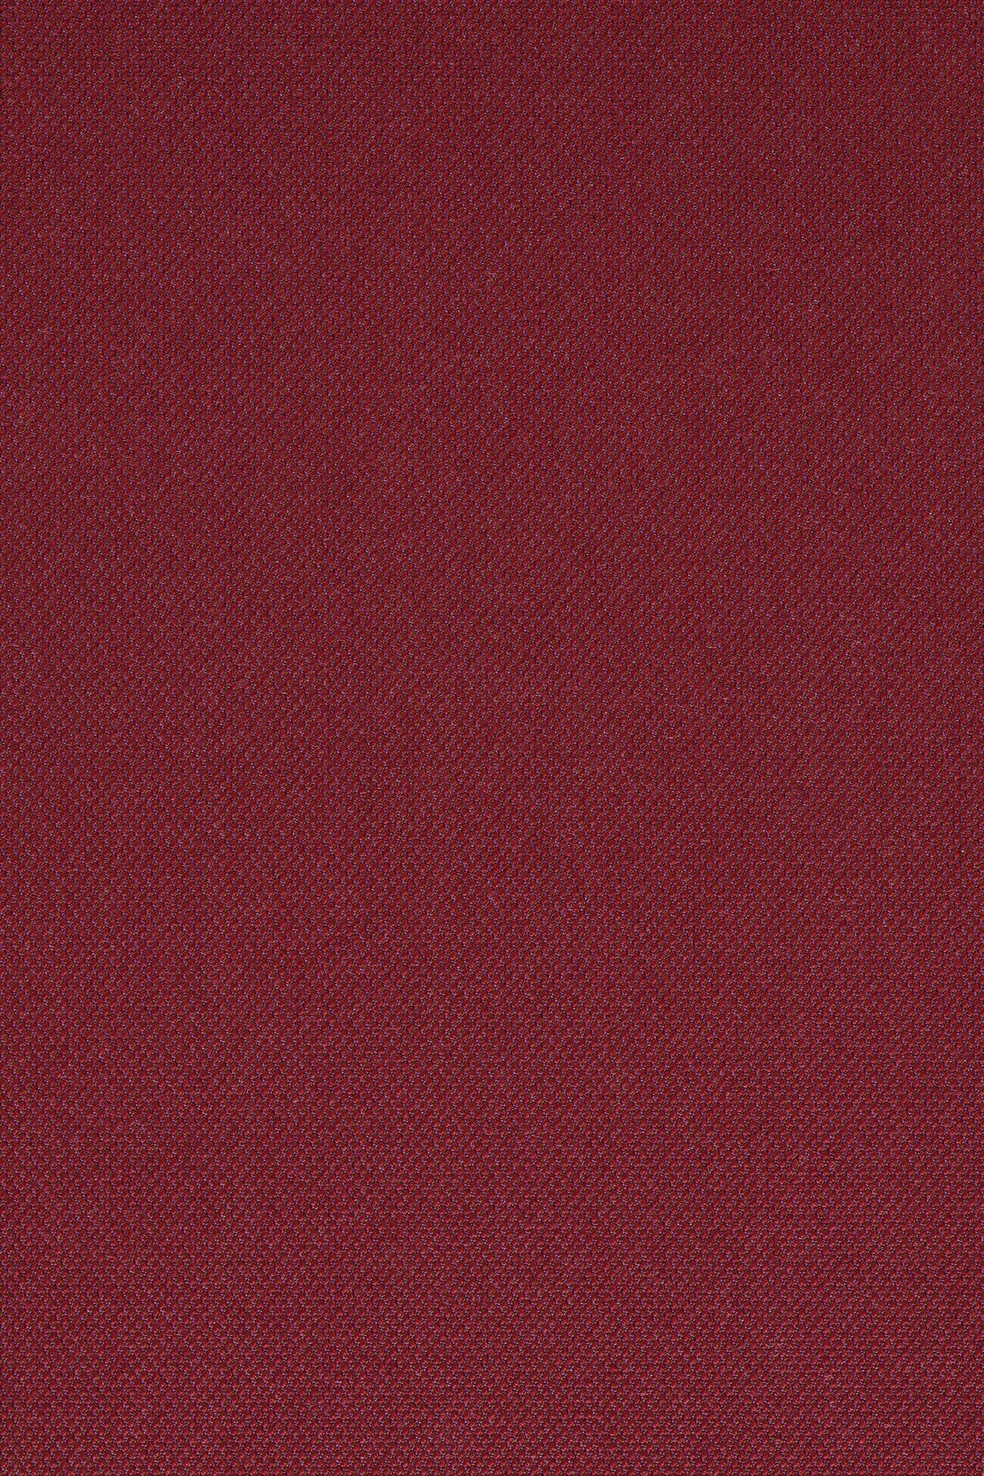 Fabric sample Steelcut Trio 3 686 pink